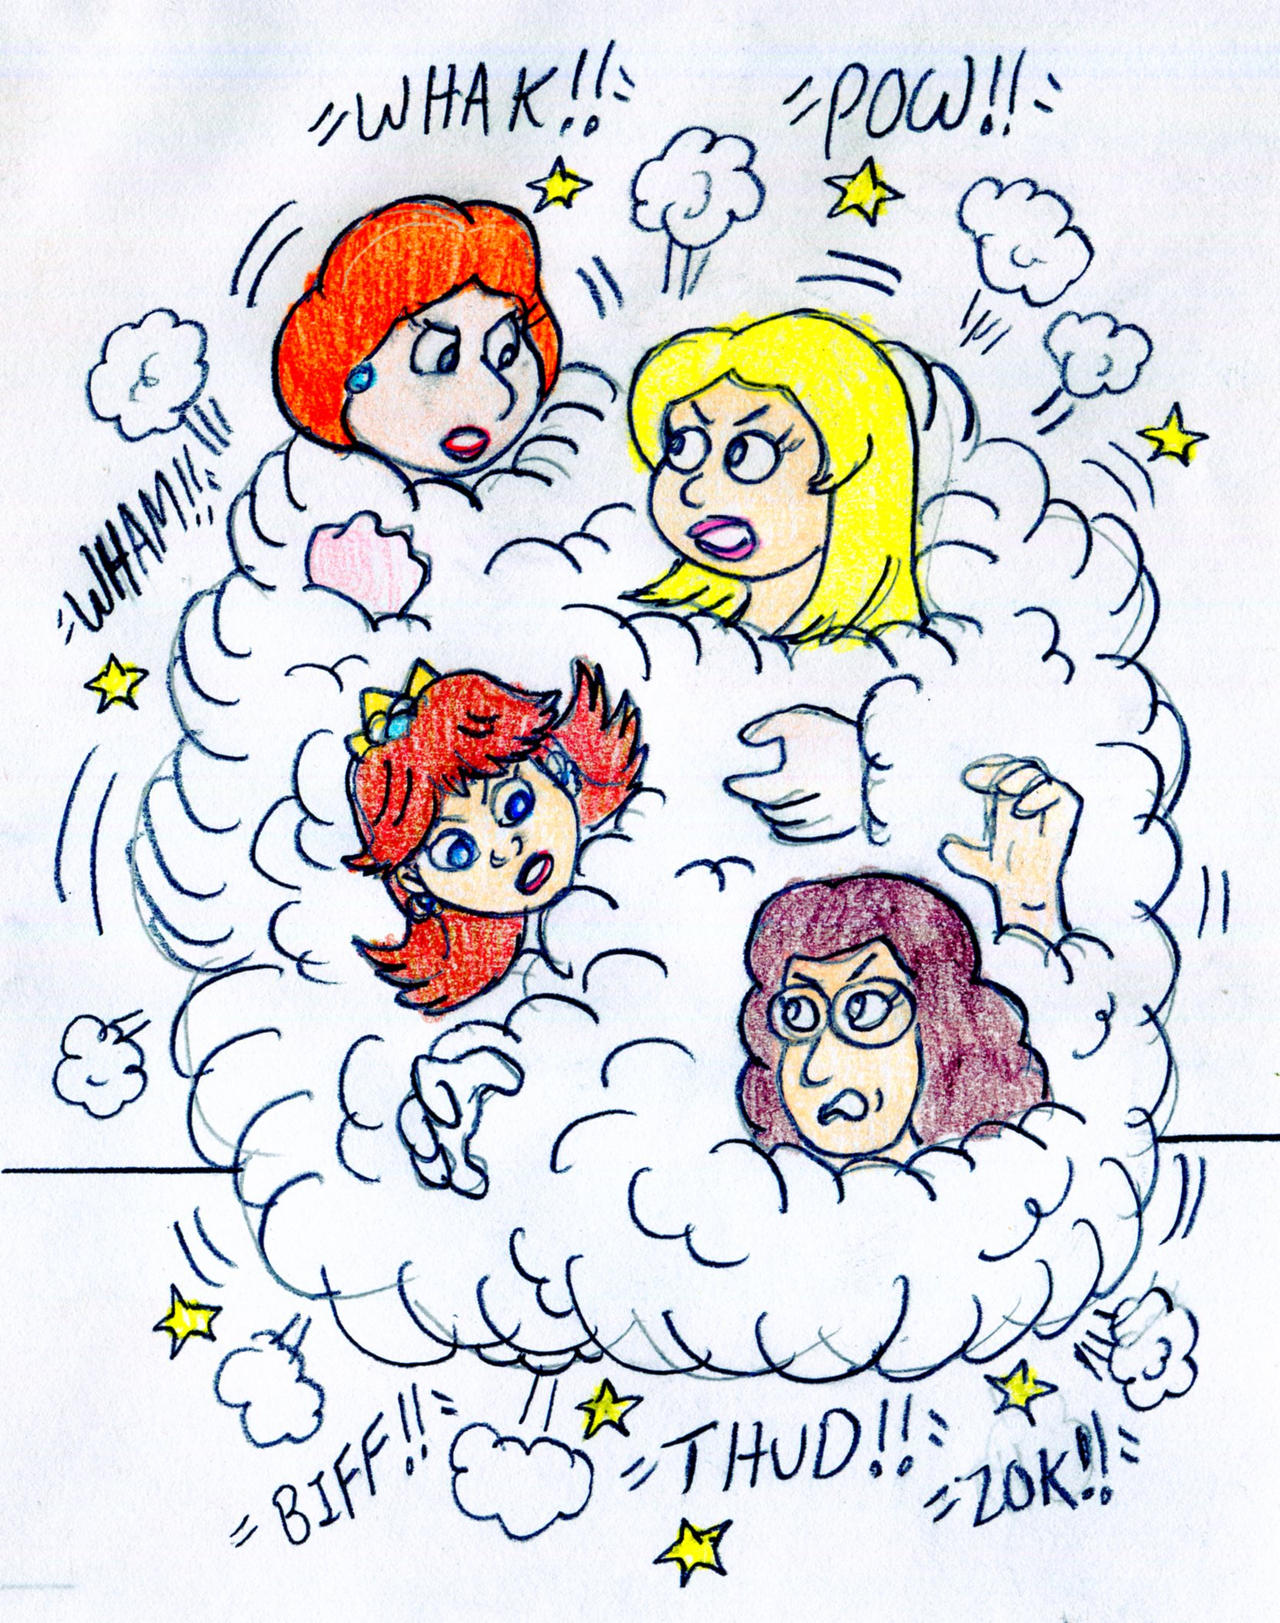 Fight Cloud Ladies by Jose-Ramiro on DeviantArt